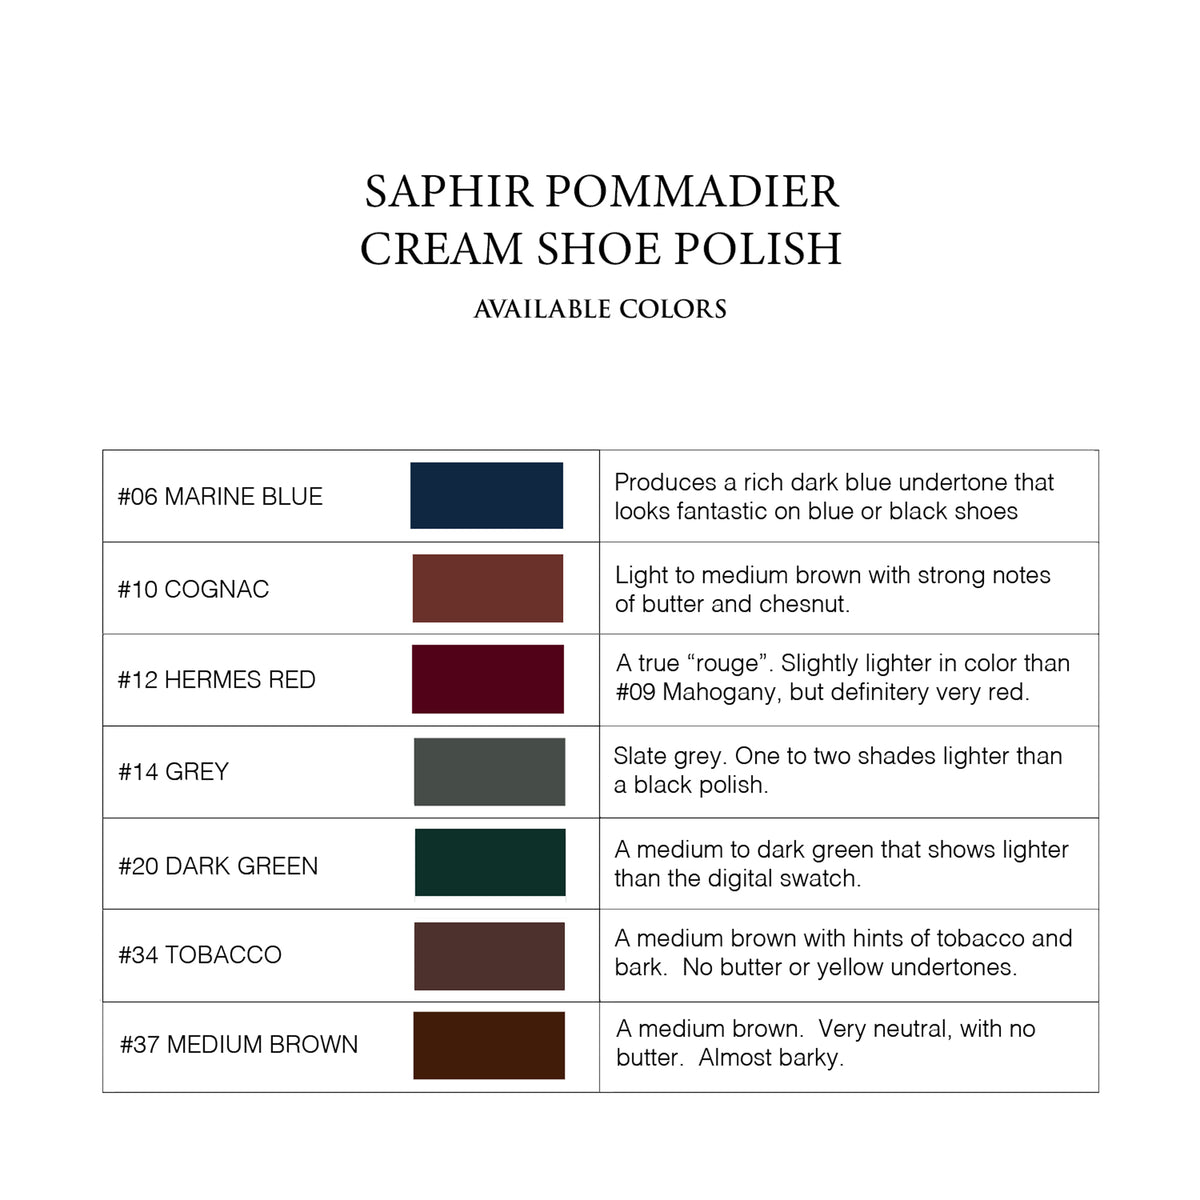 Saphir Pommadier Cream Polish Samples from KirbyAllison.com for color matching.